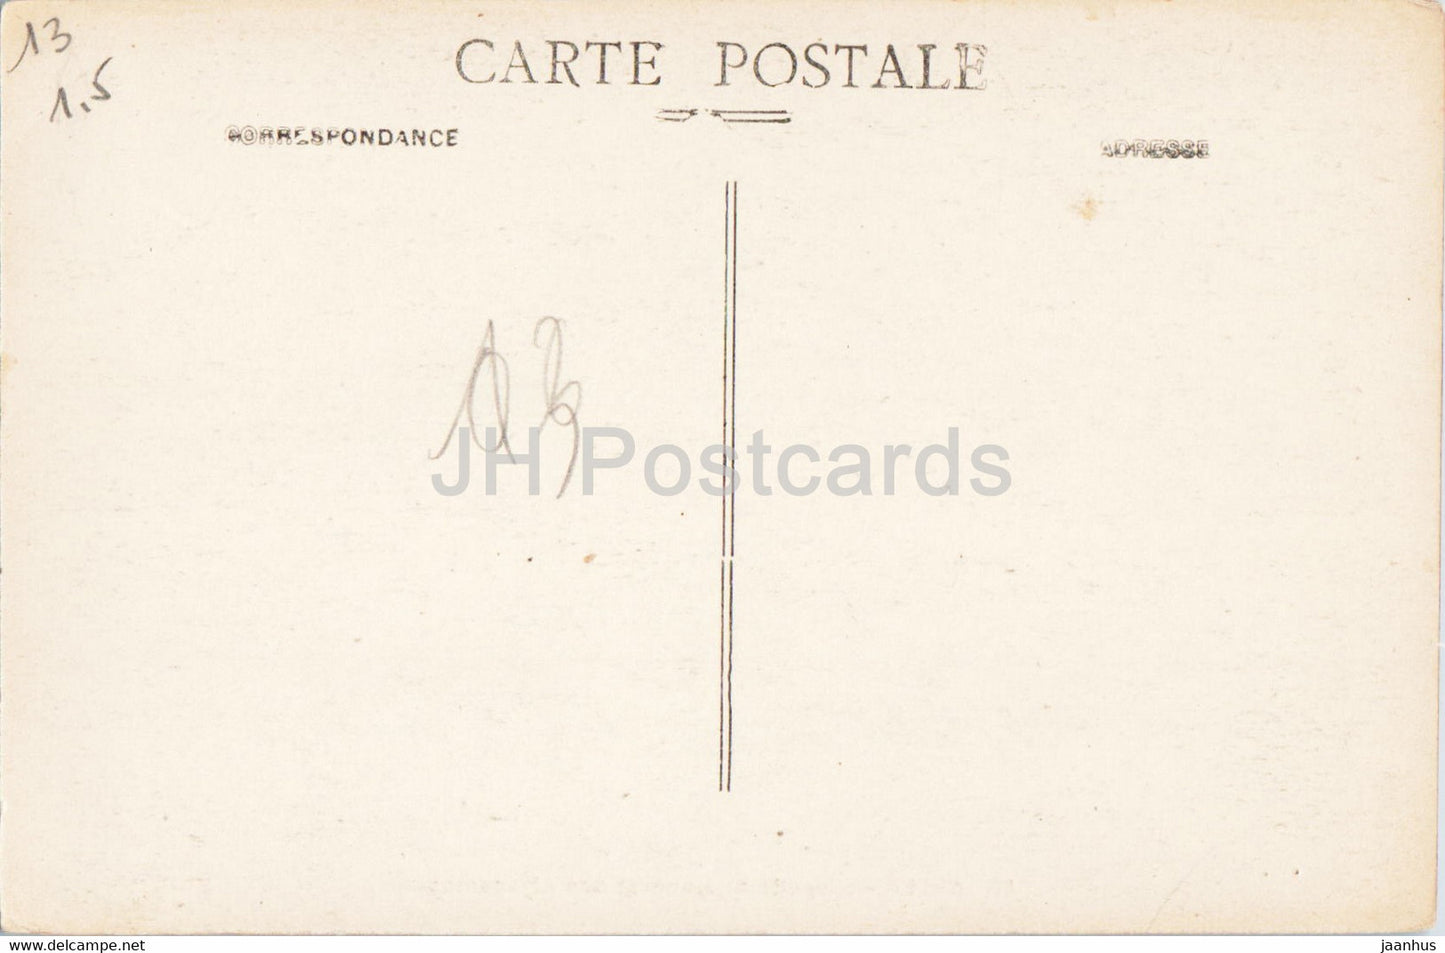 Arles - Chapelle St Honorat des Alyscamps - 80 - alte Postkarte - Frankreich - unbenutzt